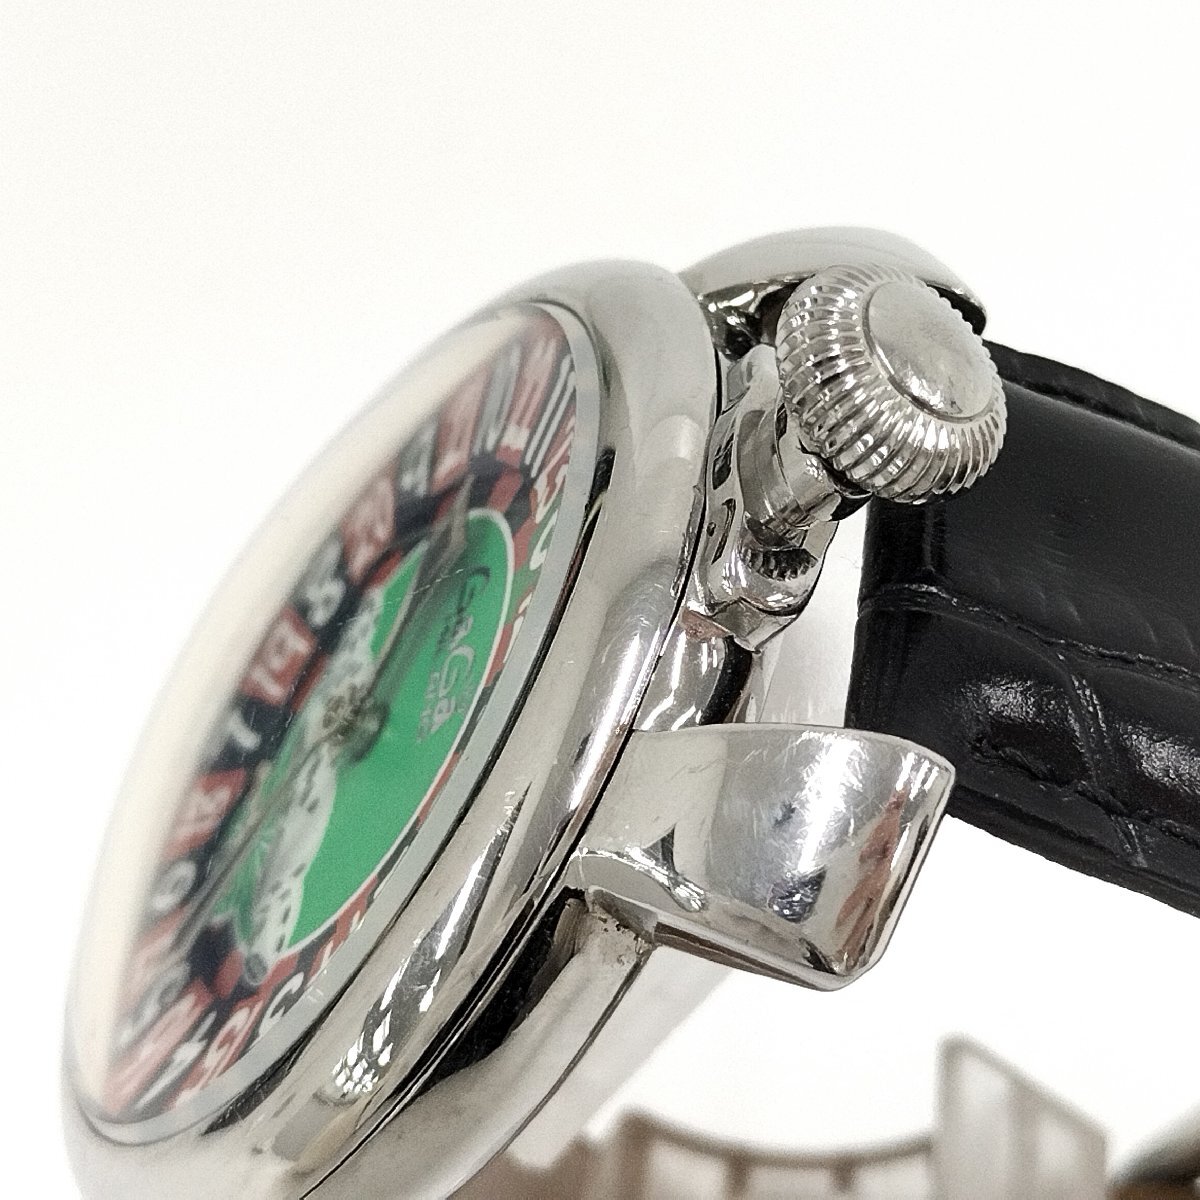 ●GaGa MILANO ガガミラノ マヌアーレ48 5010.LV.01S ラスベガス 世界500本限定 メンズ腕時計 ルーレット カジノ 手巻き 中古[ne]u580の画像2